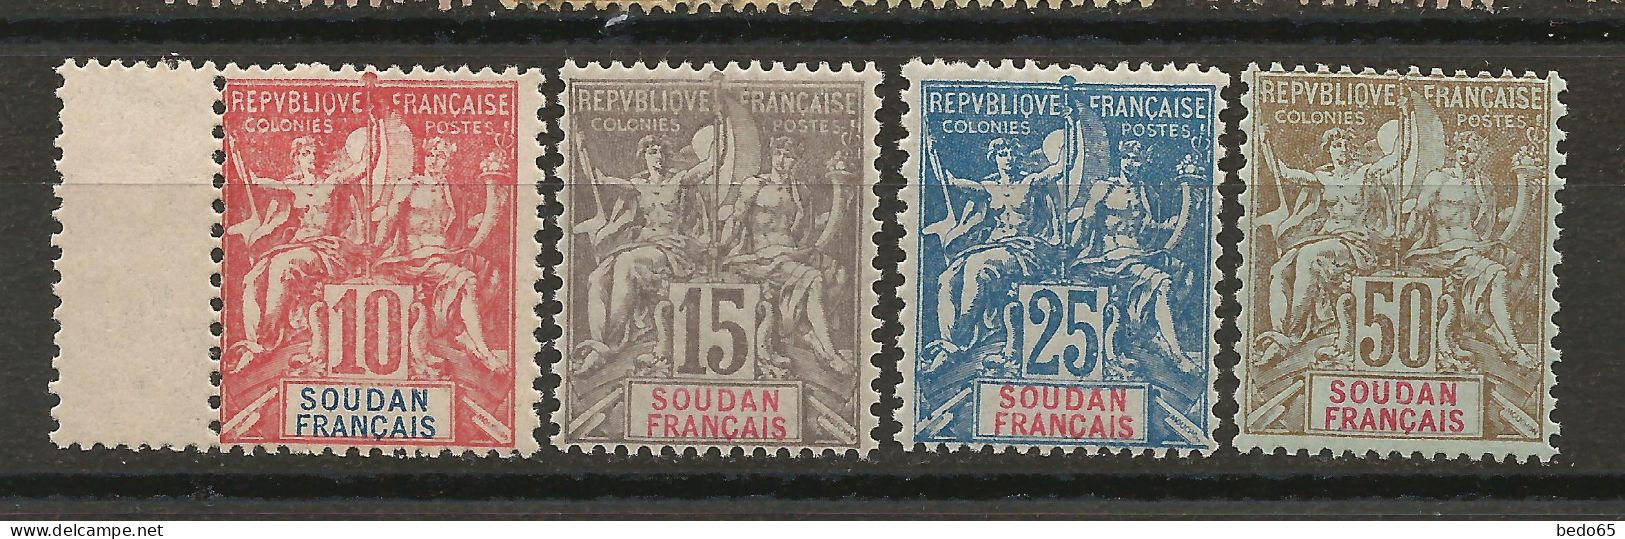 SOUDAN N° 16 à 19 Série Complète NEUF** LUXE  SANS CHARNIERE / Hingeless / MNH - Unused Stamps